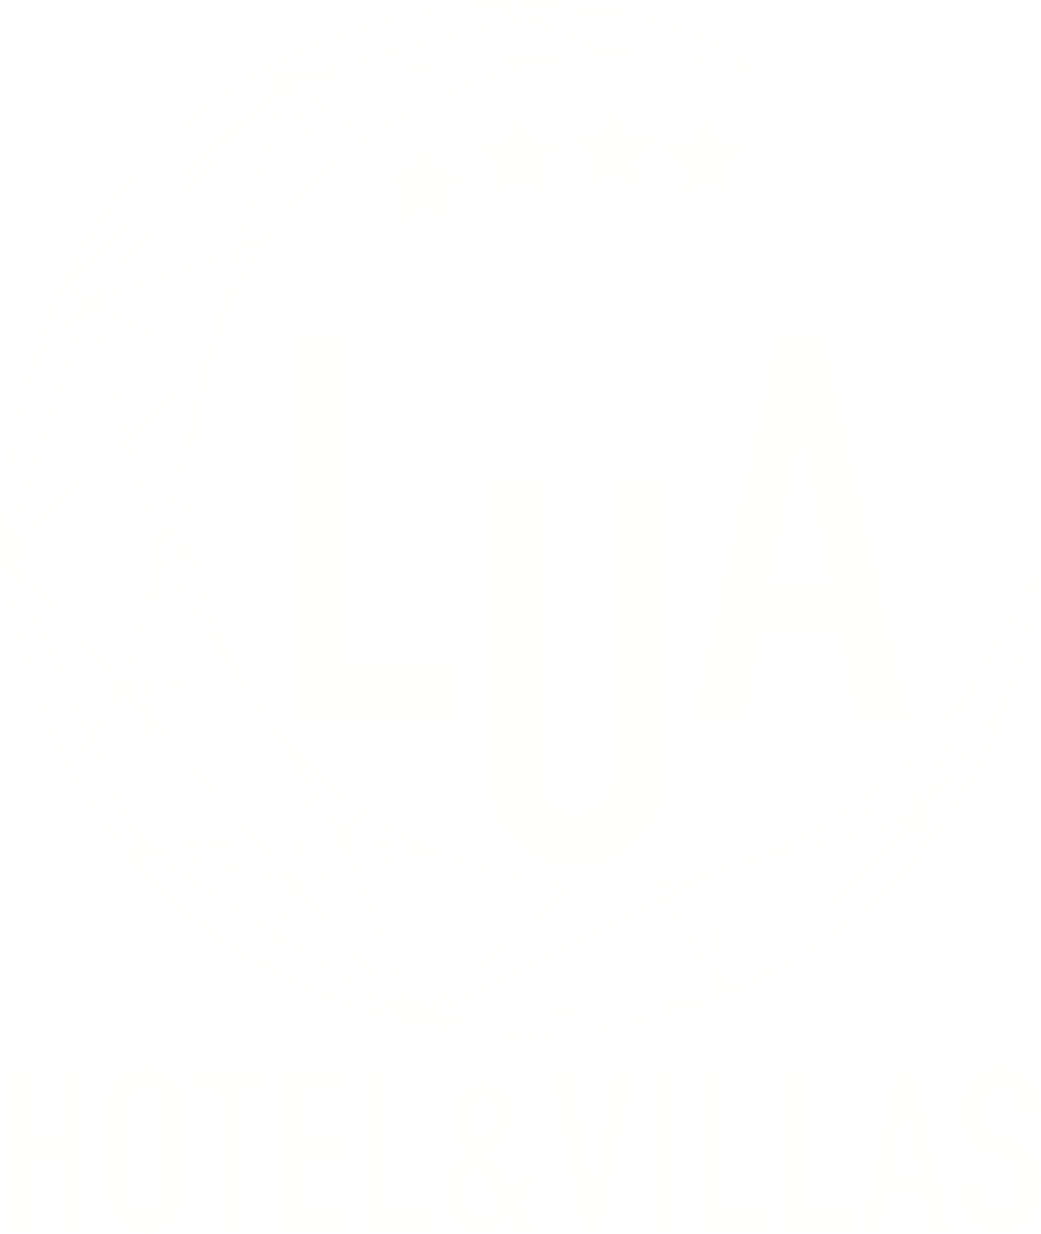 Hotel & Villas LUA